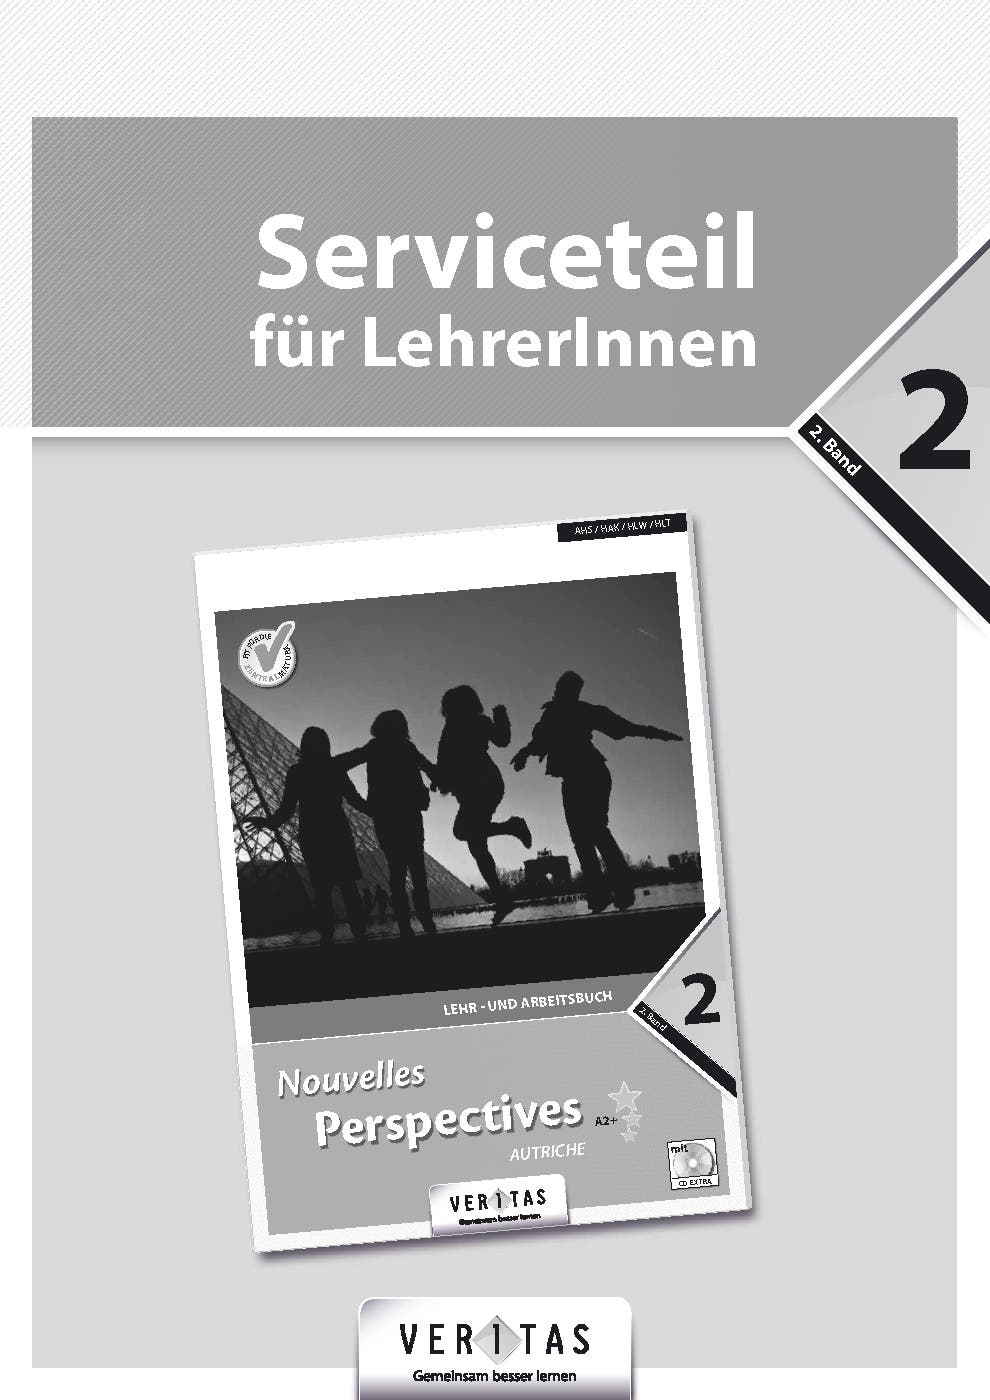 Nouvelles Perspectives A2+ Autriche. Serviceteil für LehrerInnen (gedruckt)